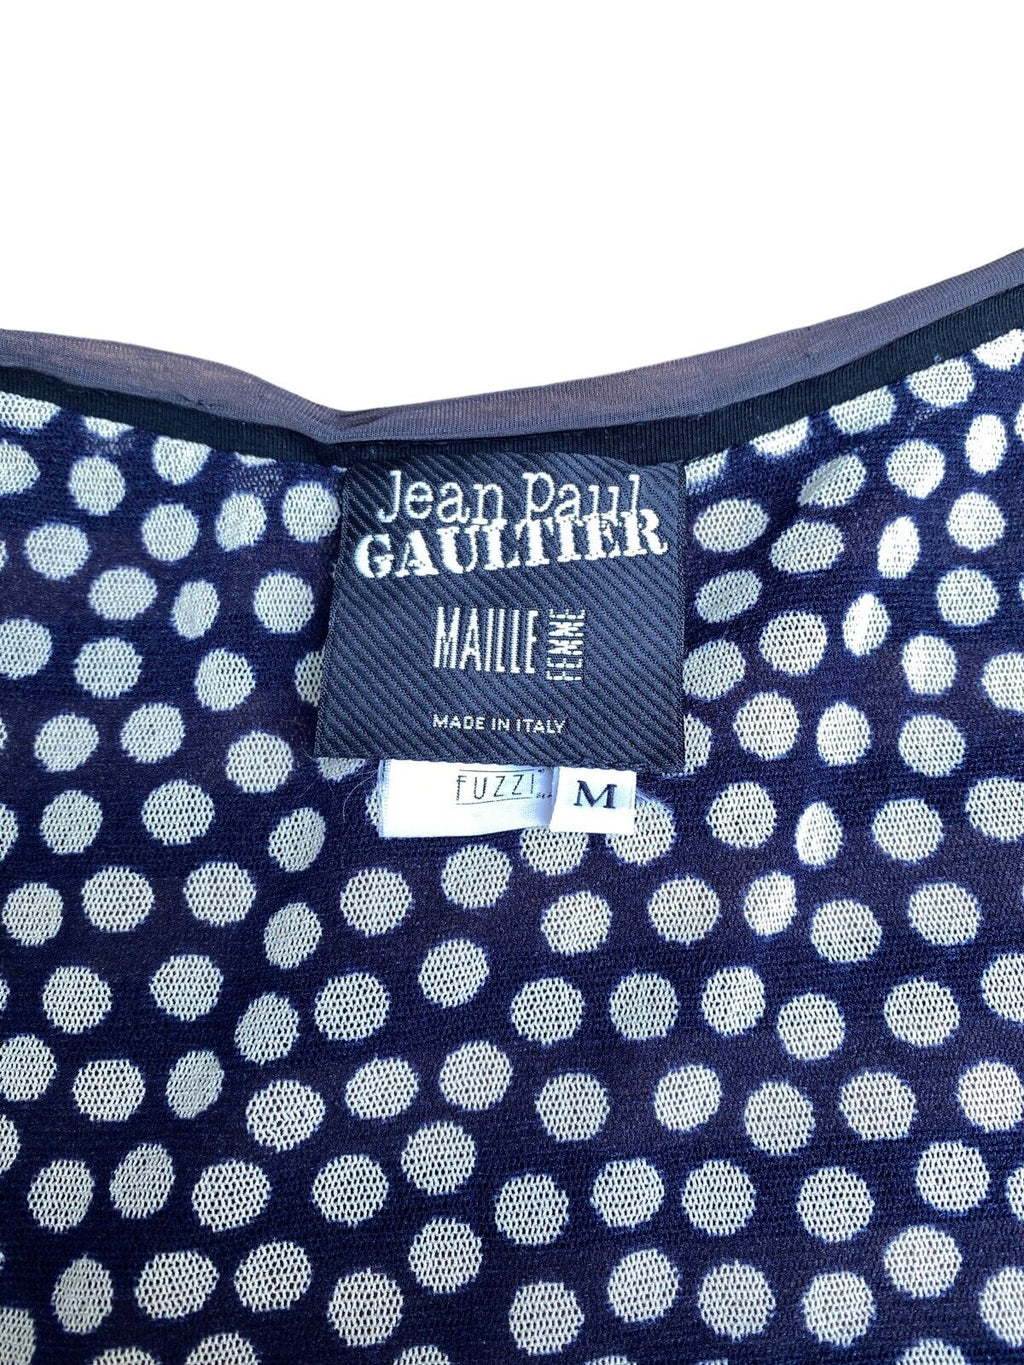 Jean Paul Gaultier  Vintage dot nylon Tank top Double layer Size M Medium